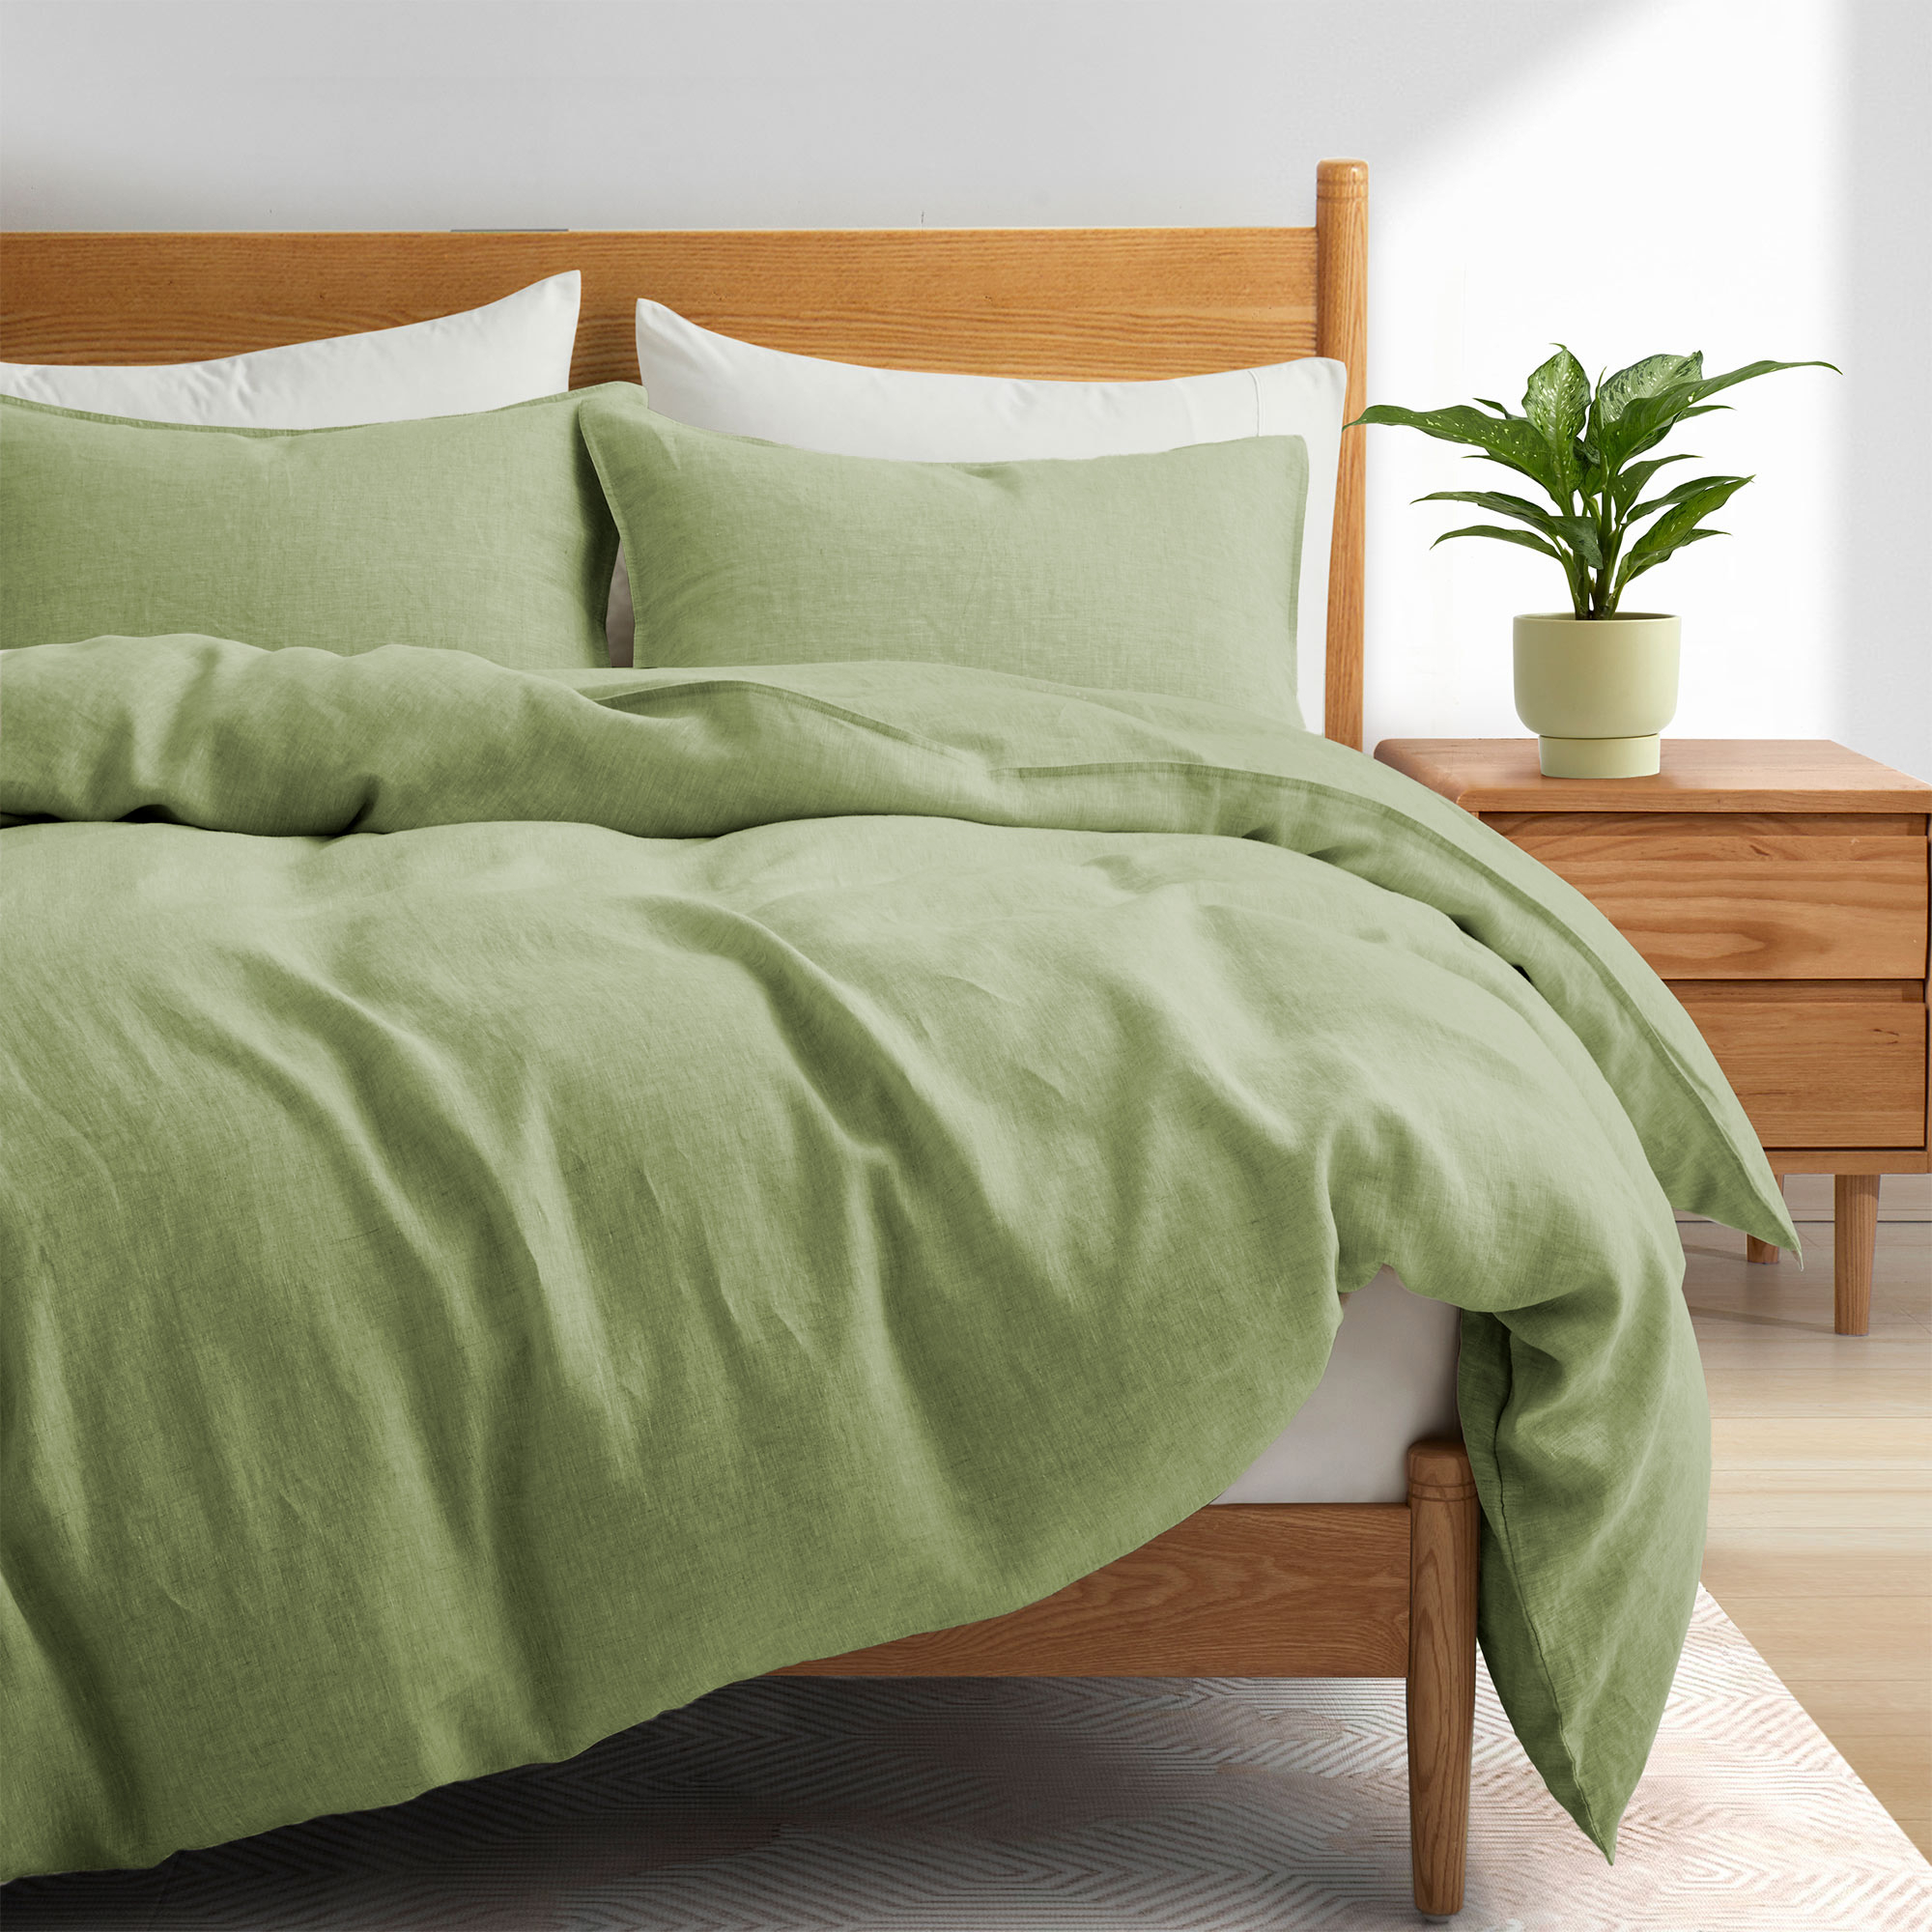 Premium Flax Linen Duvet Cover Set With Pillow Shams Breathable Moisture Wicking Bedding Set - Light Gray, King